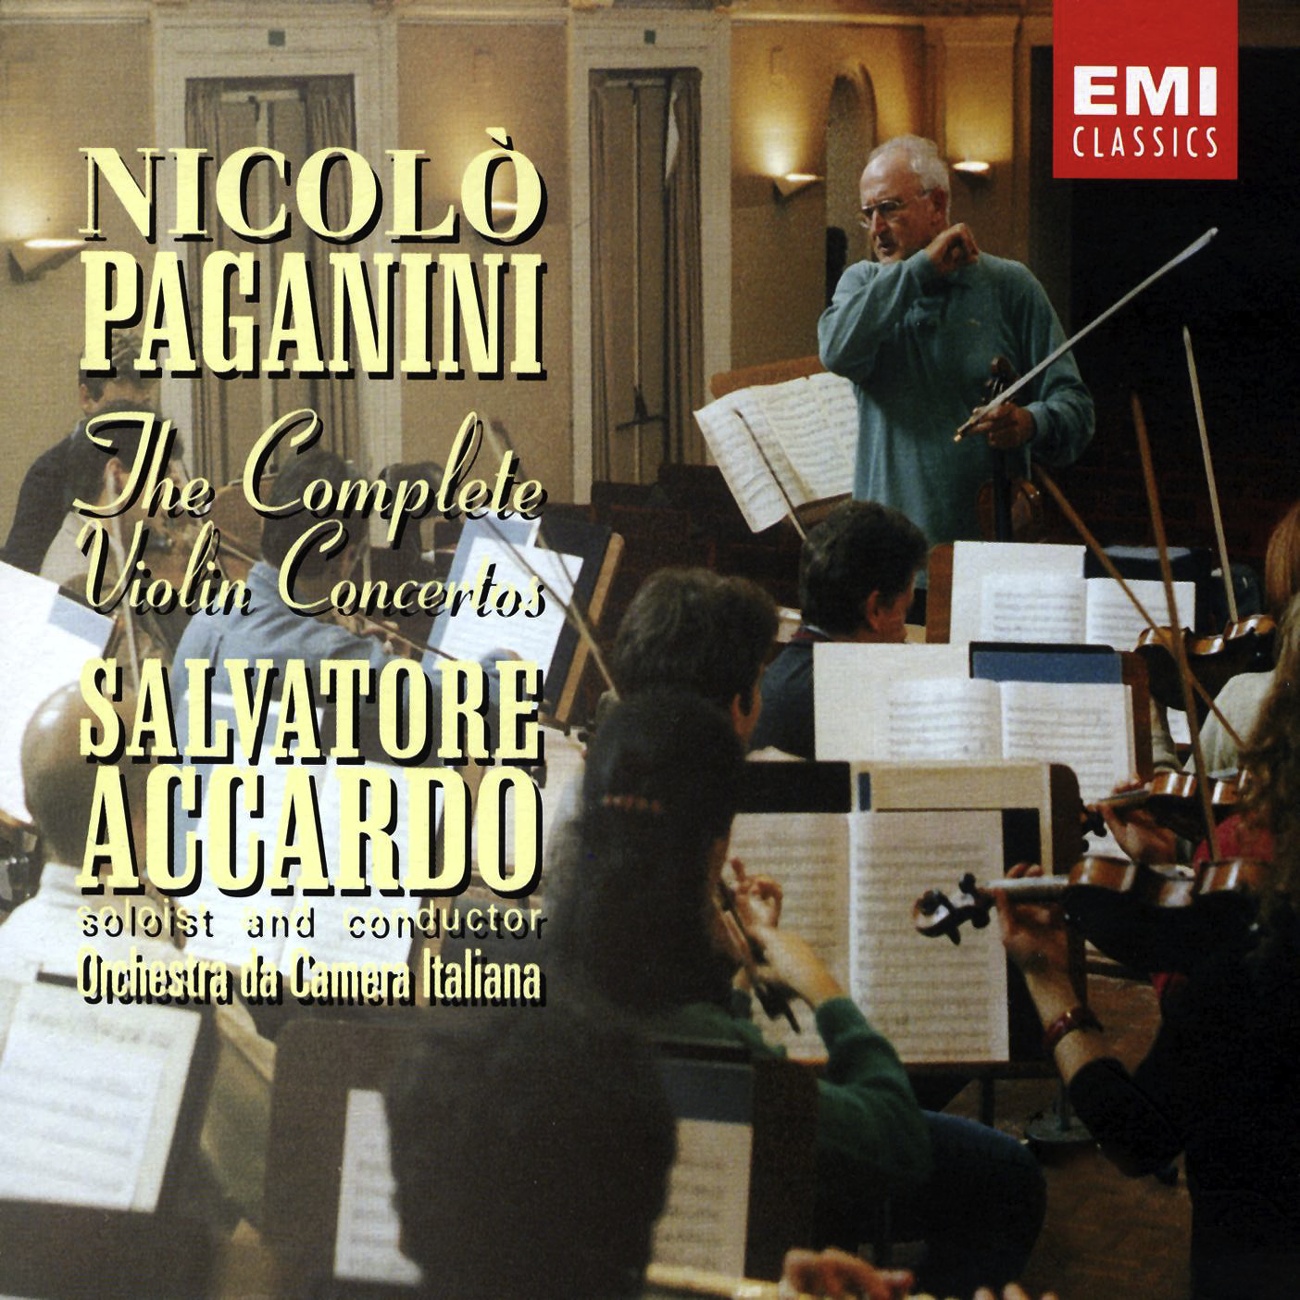 Violin Concerto n.5 in A Minor: I. Allegro Maestoso (Cadenza Accardo)